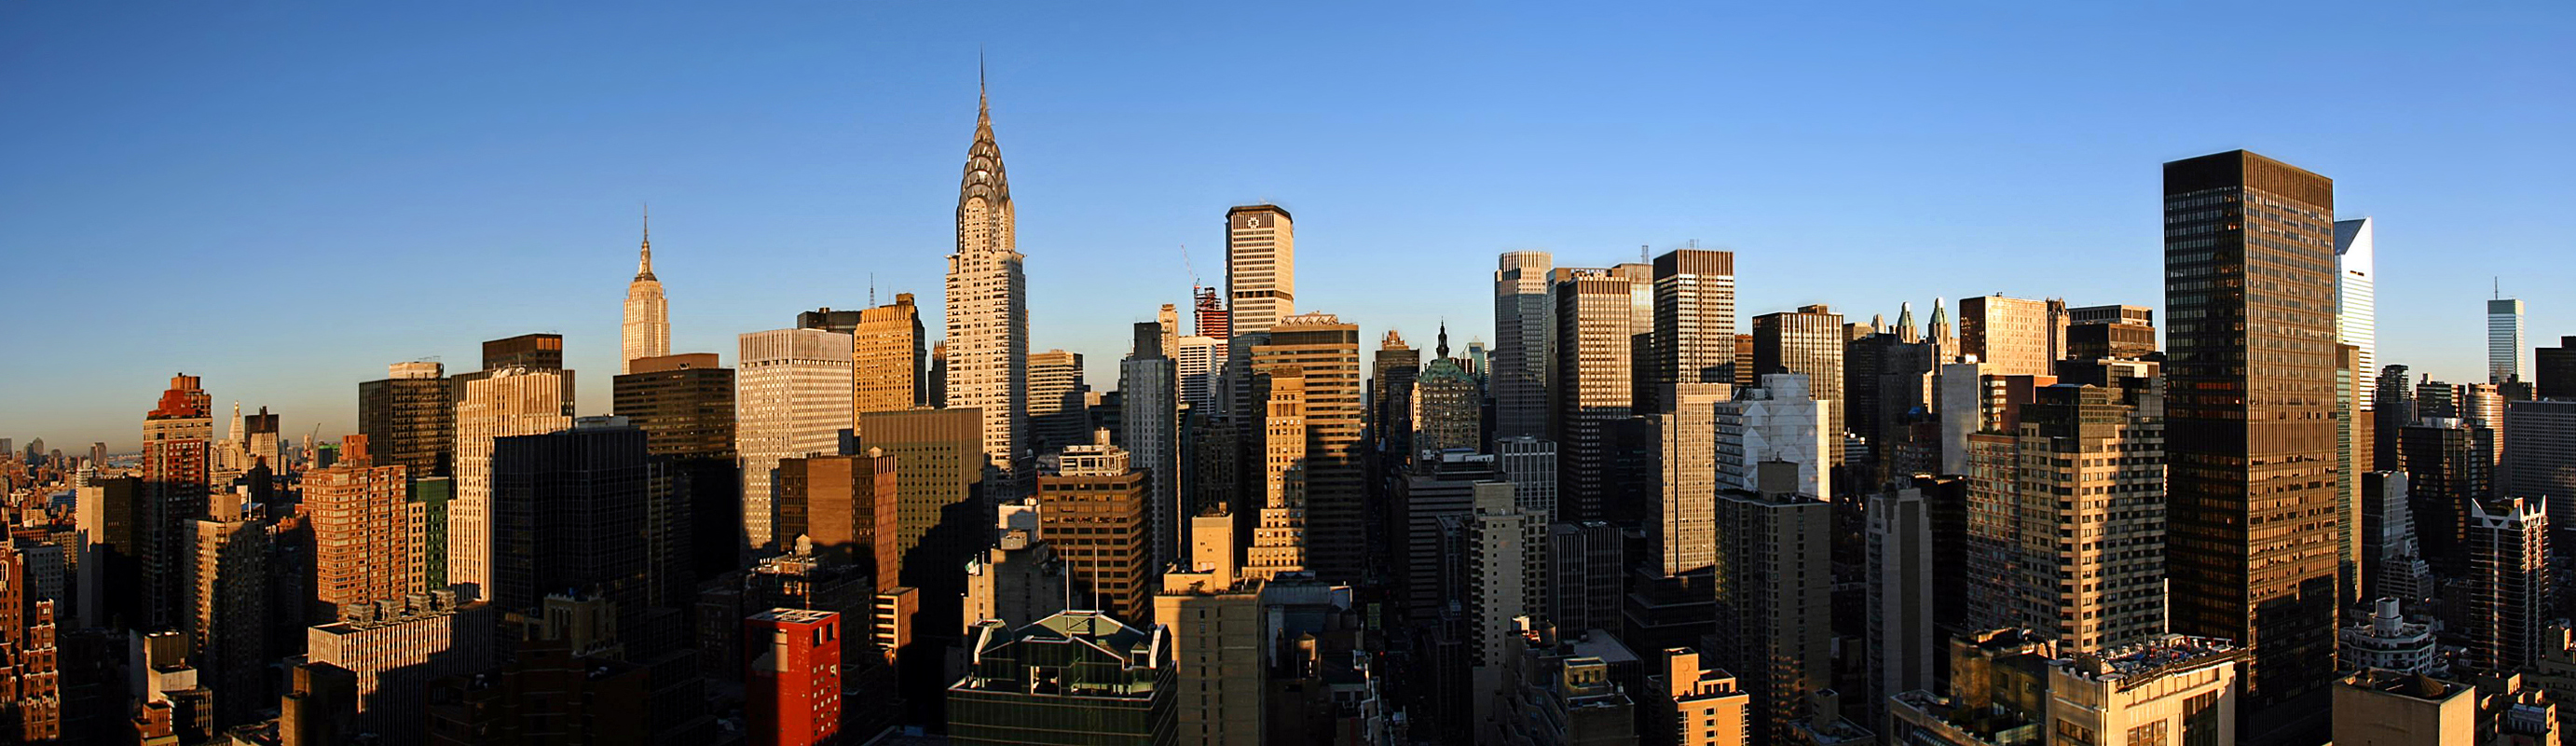 free clip art new york skyline - photo #42